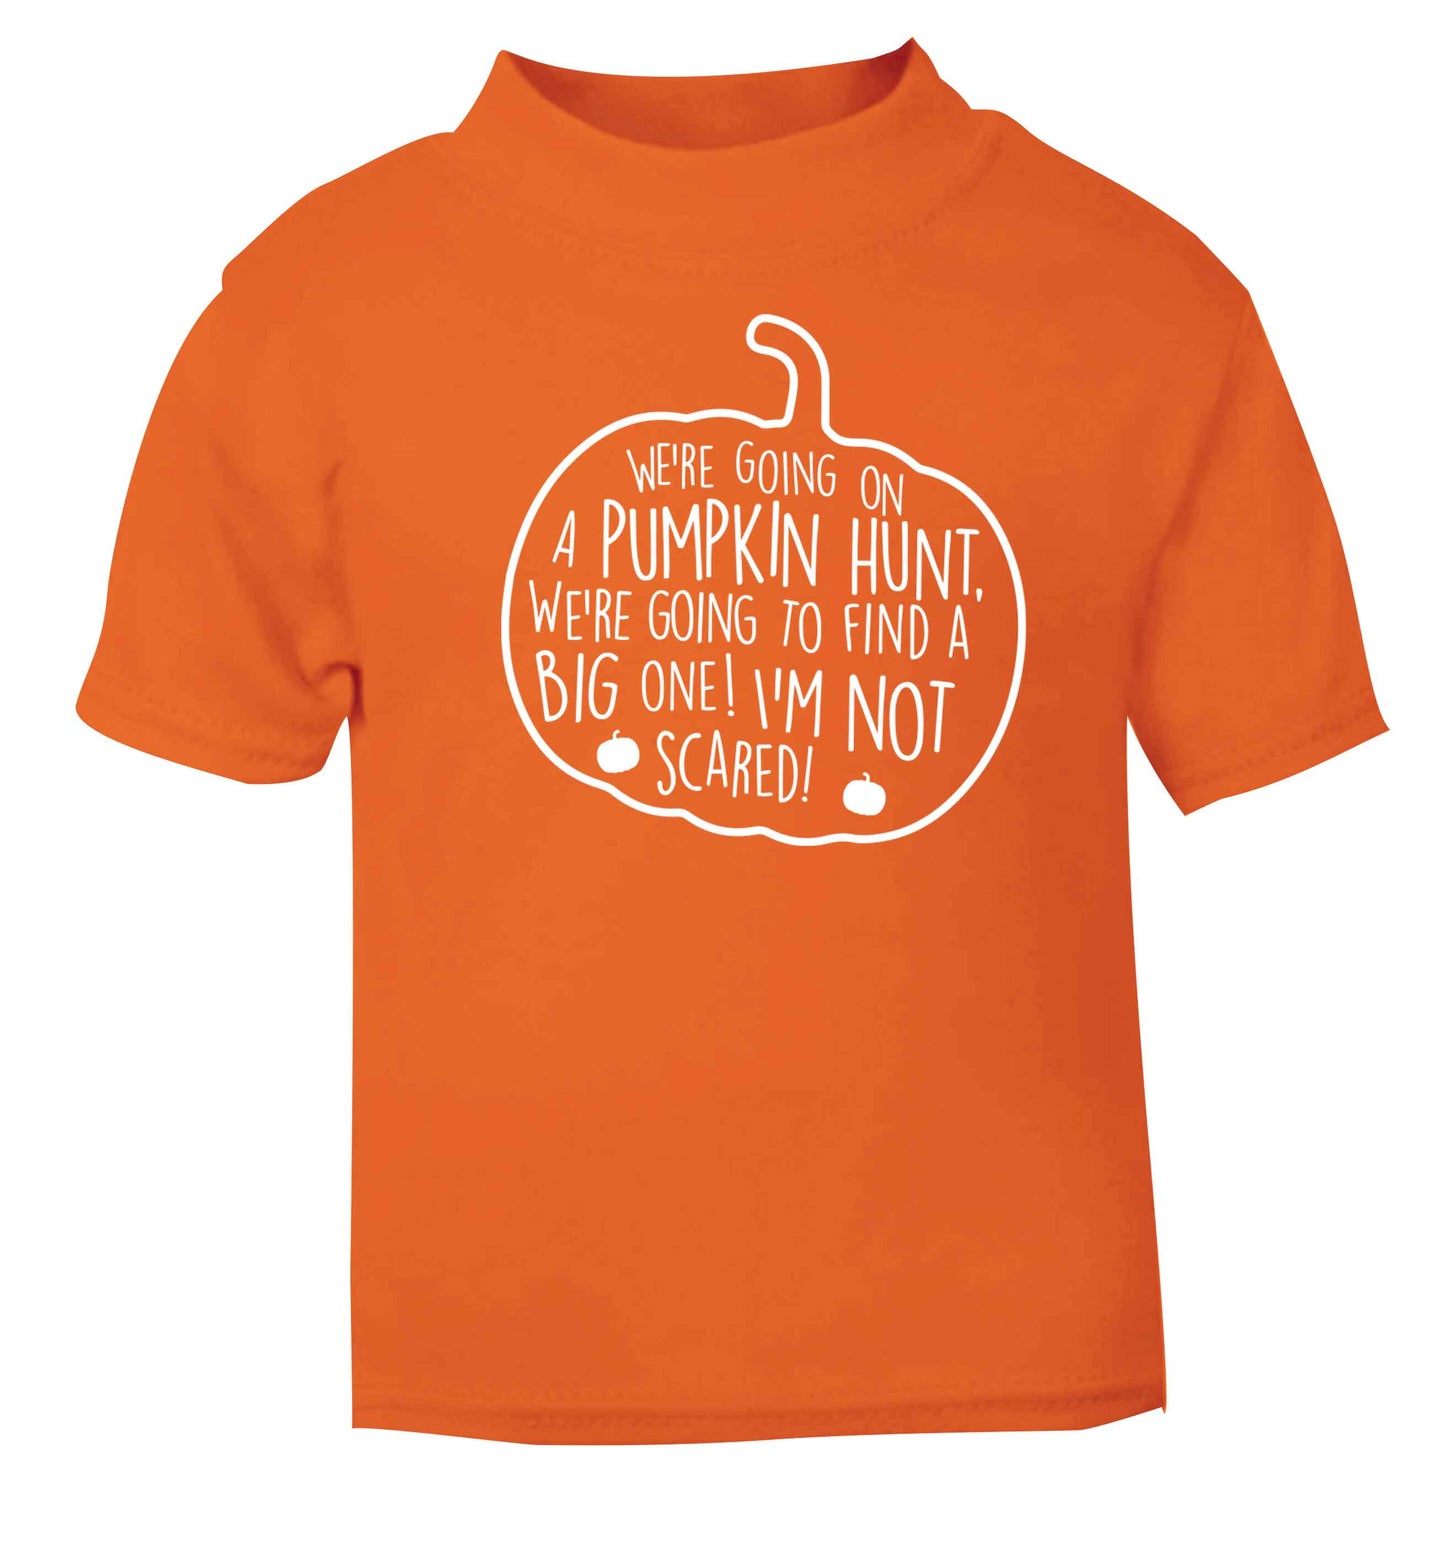 We're going on a pumpkin hunt orange baby toddler Tshirt 2 Years